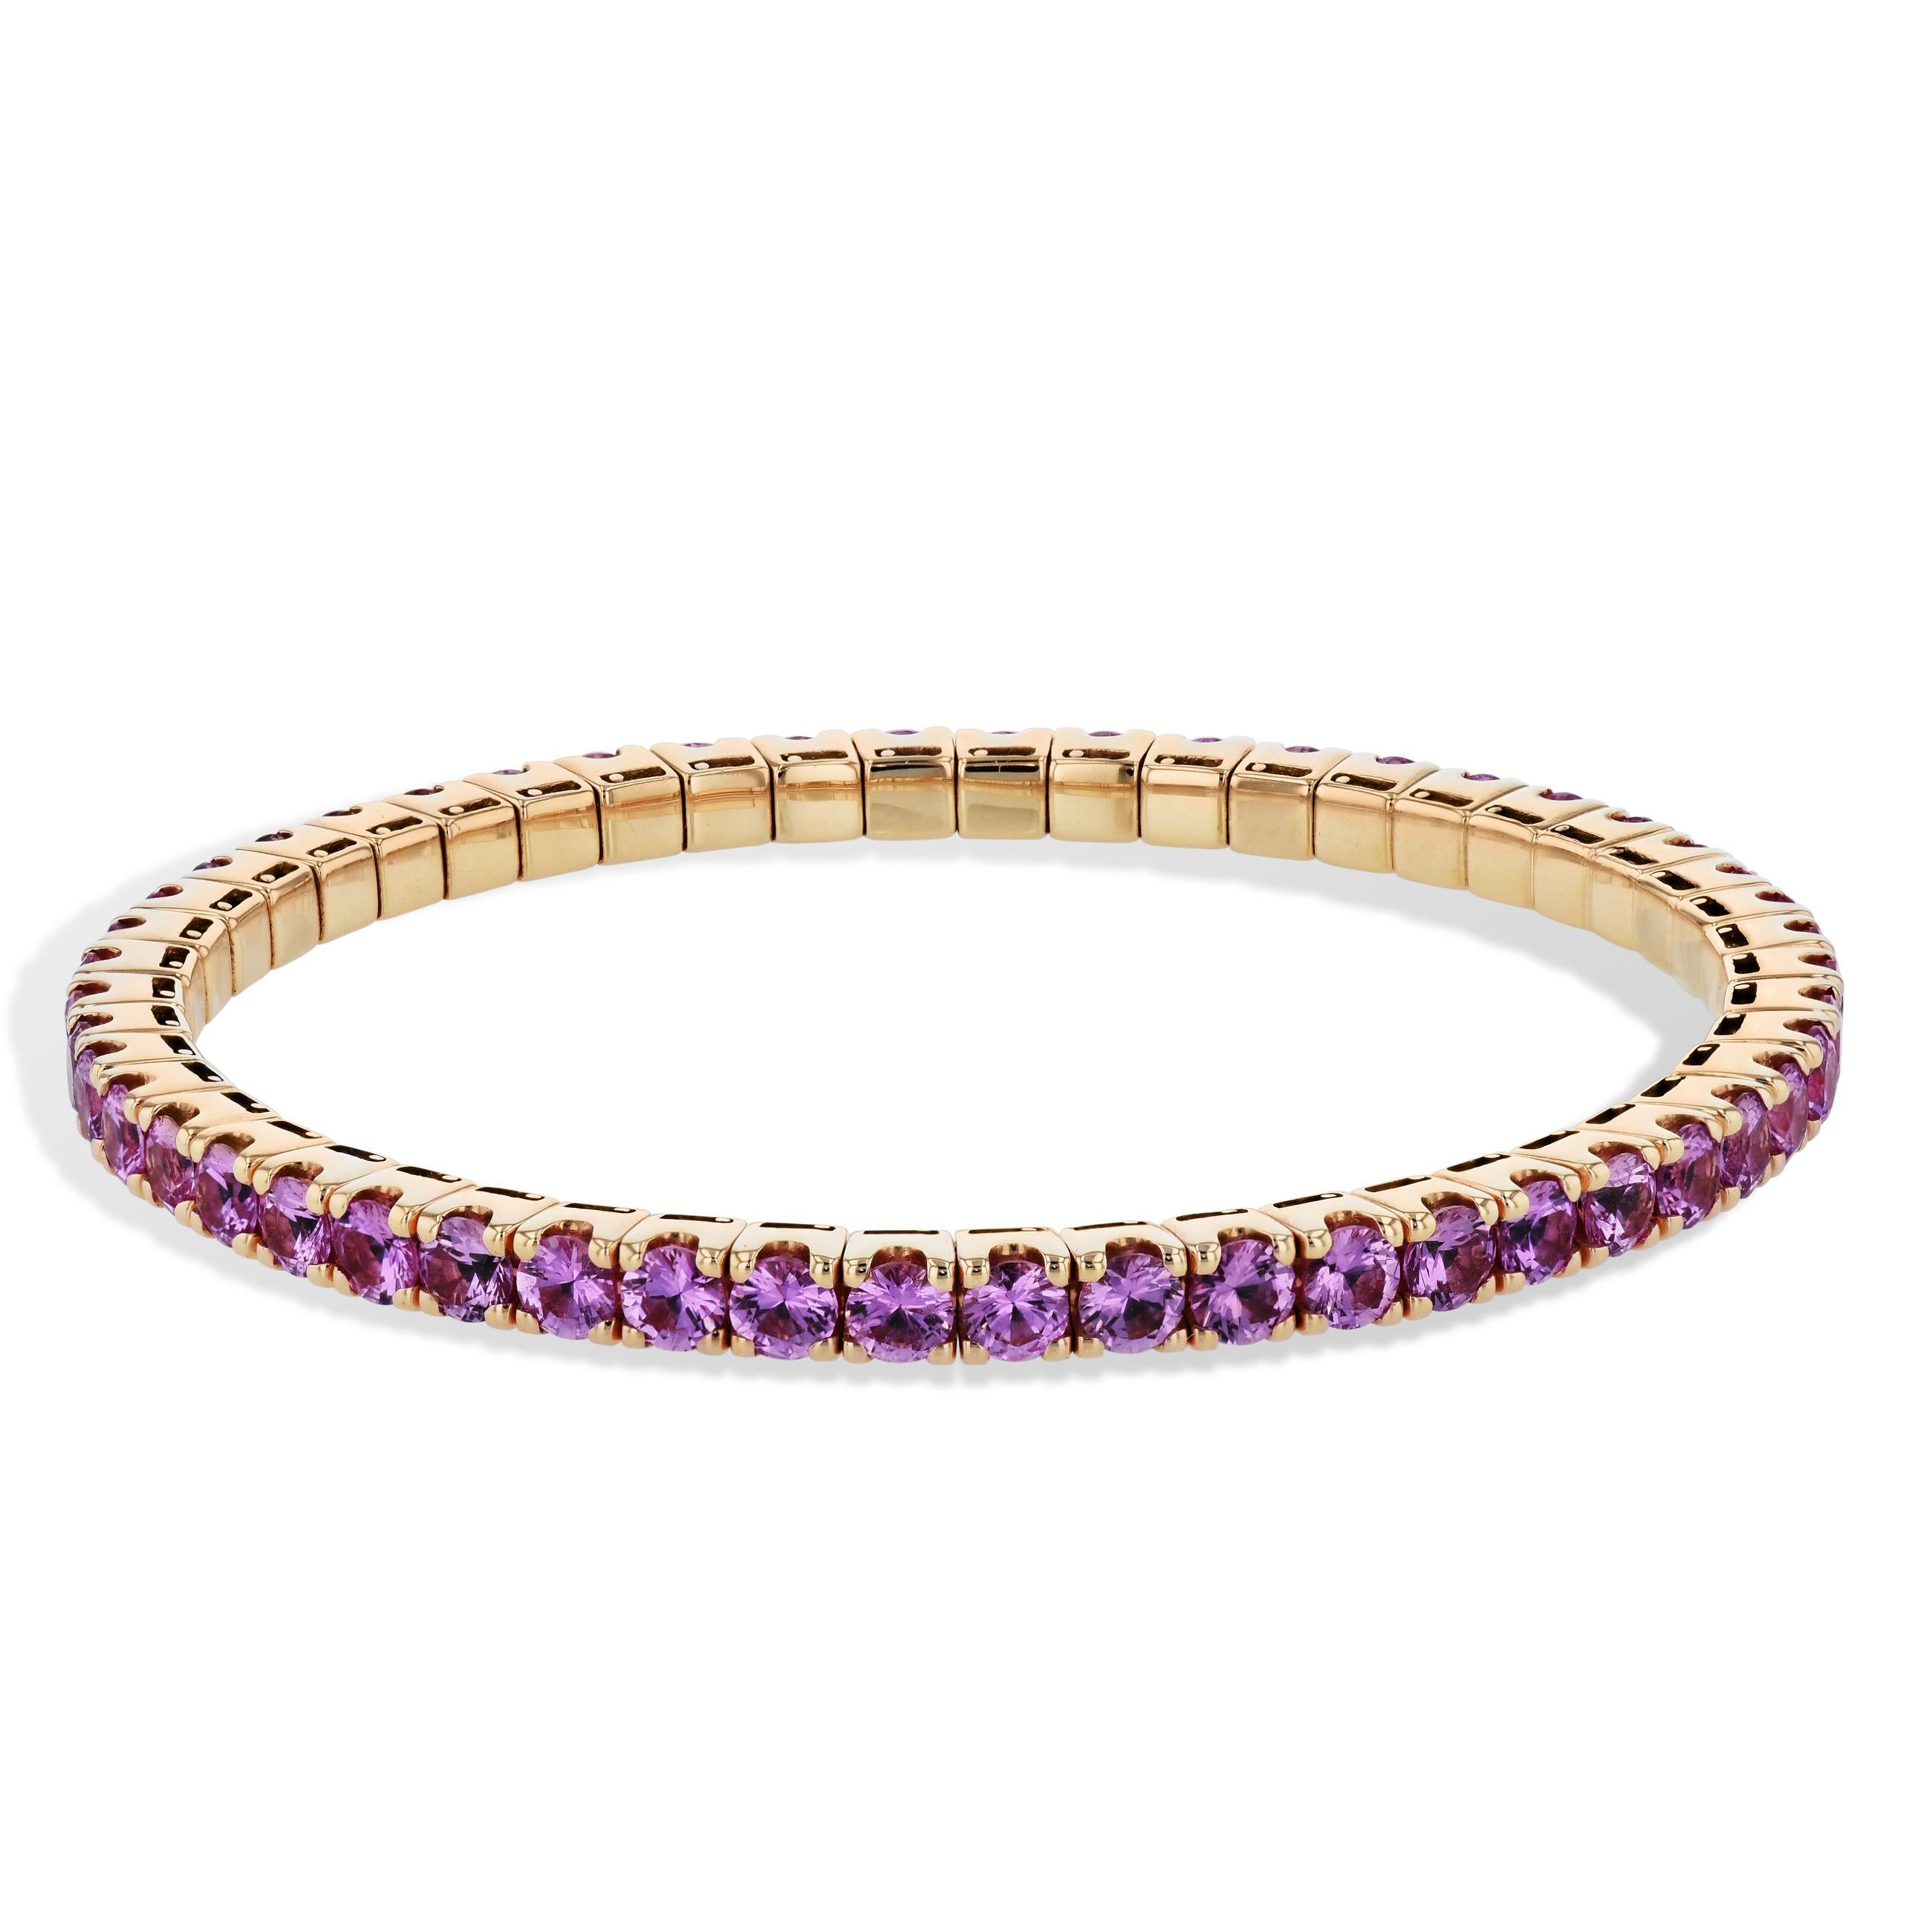 Brilliant Cut 9.83 Carat Pink Sapphire Stretch Tennis Bracelet 18 Karat Rose Gold